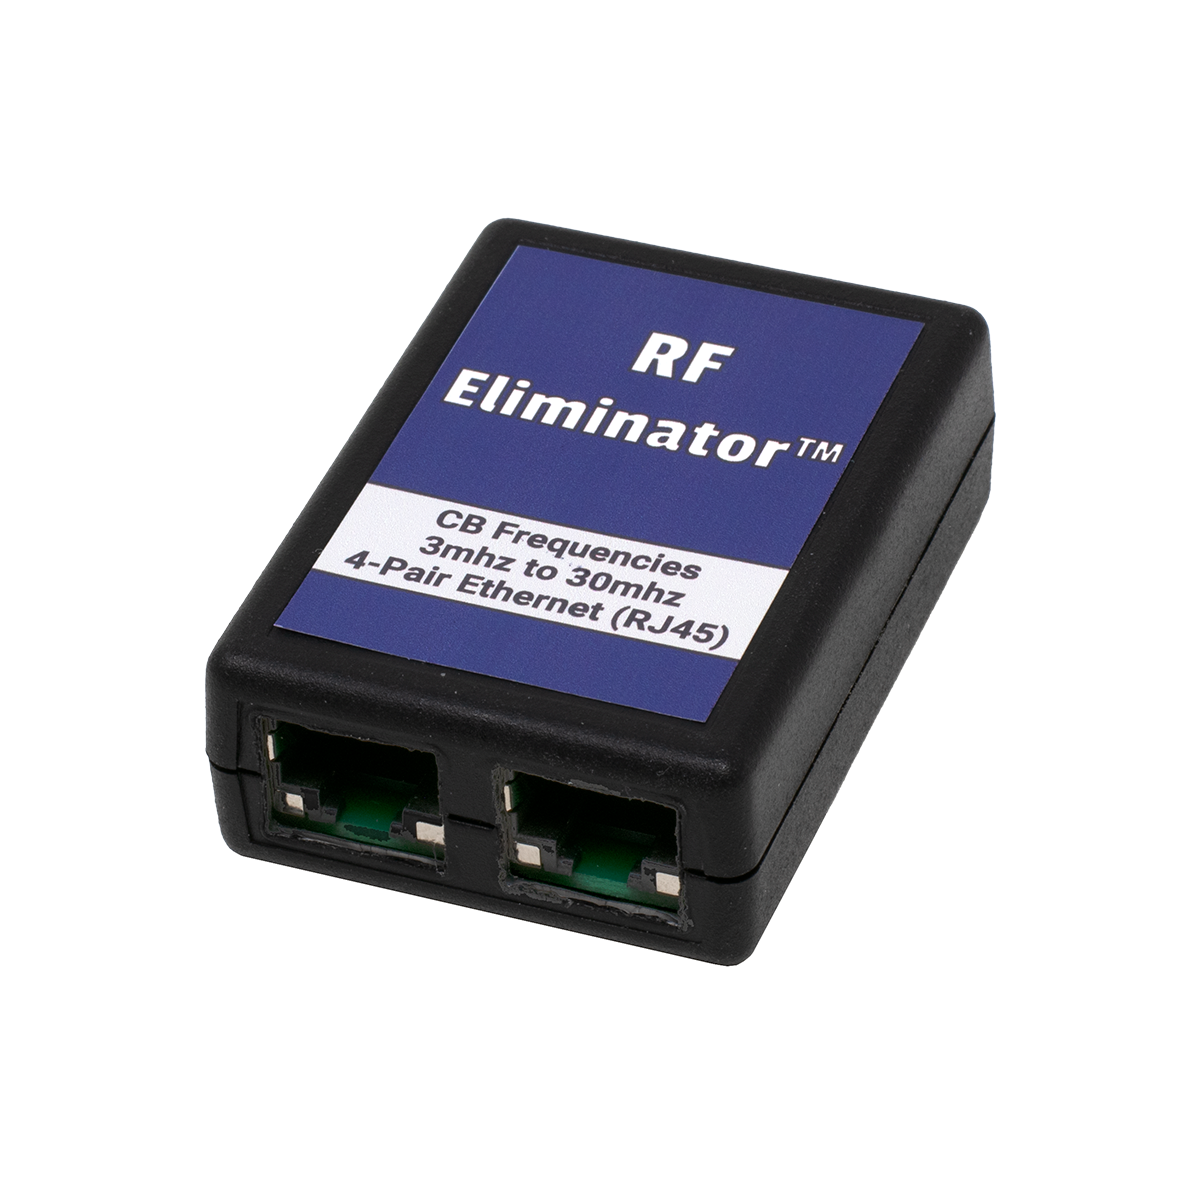 RF Eliminator - 4 Pair Ethernet - CB (Side View)